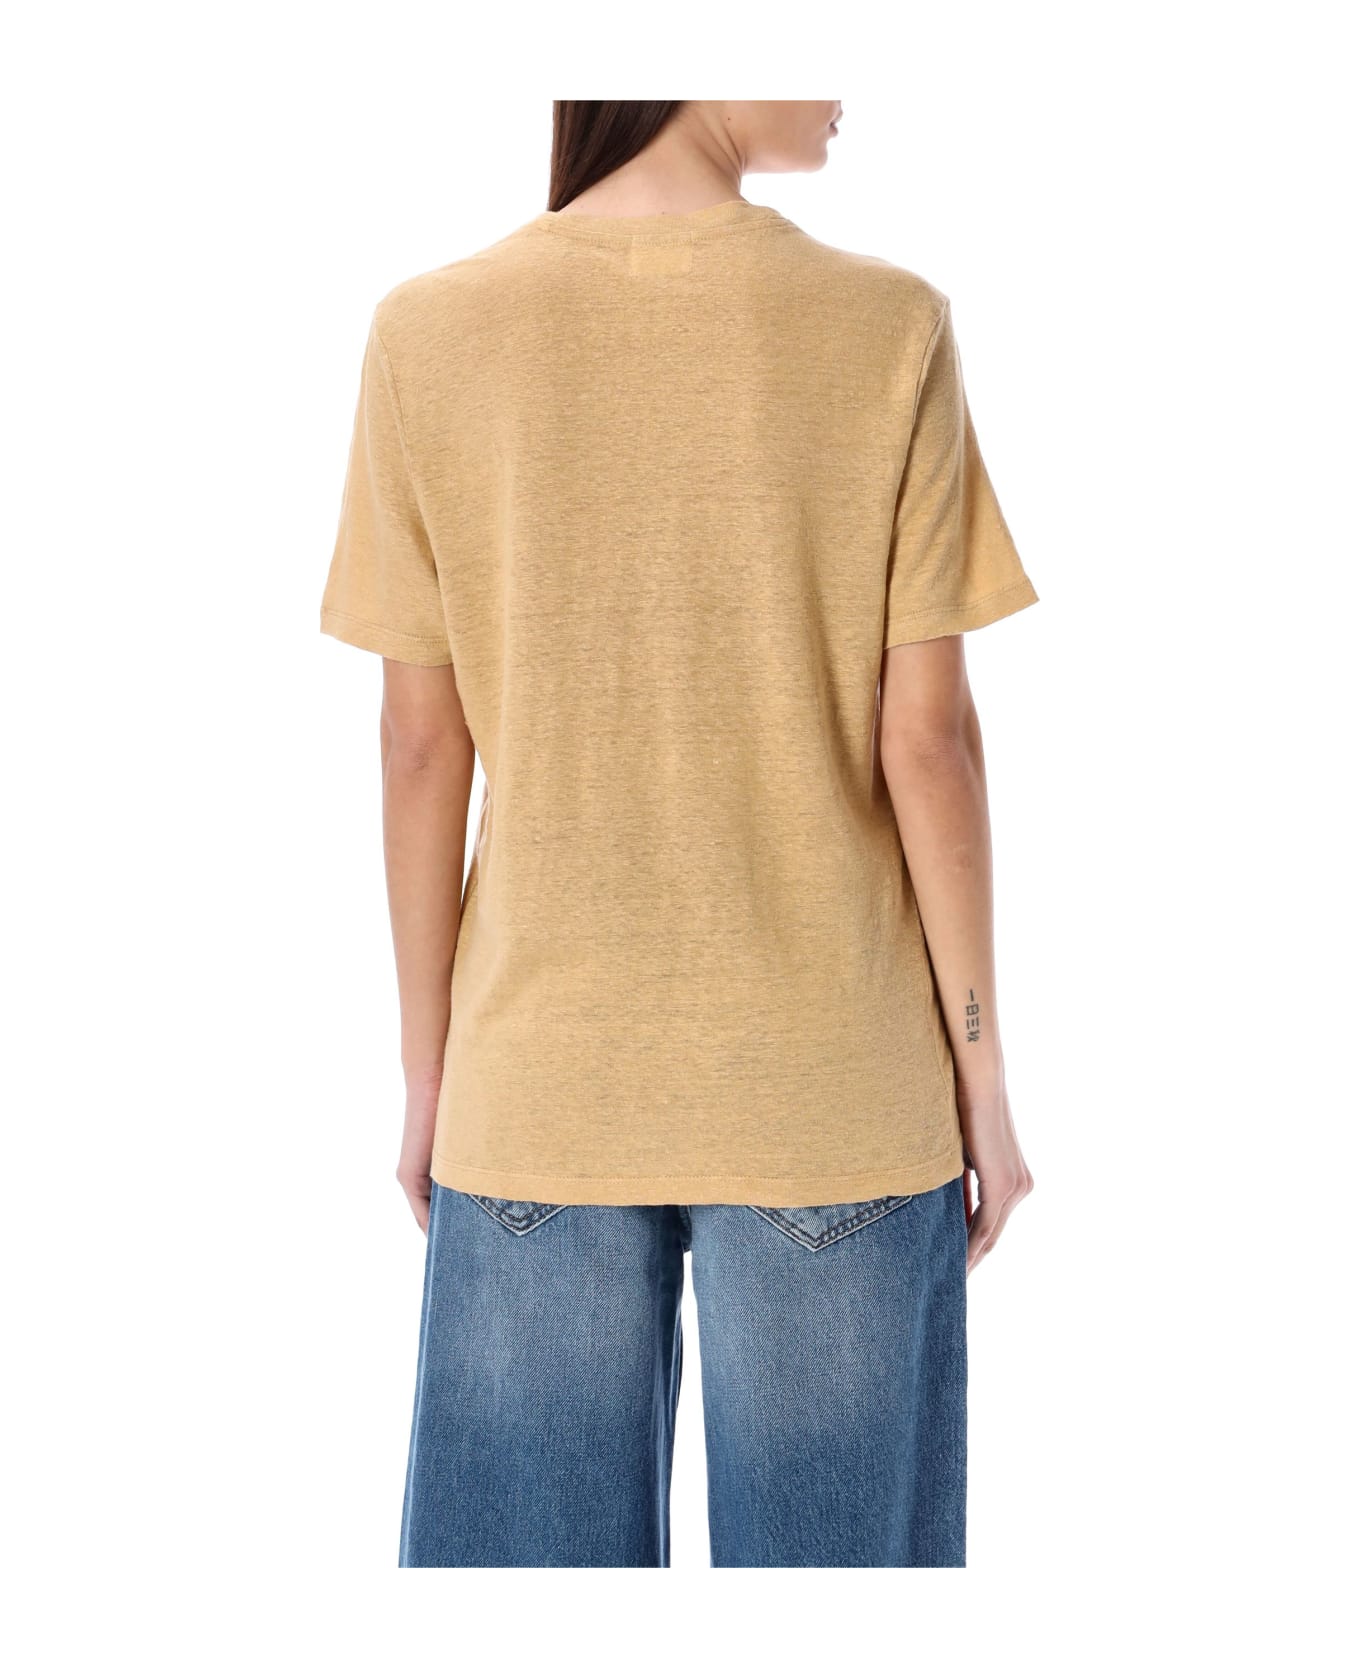 Marant Étoile Zewel T-shirt - SAHARA/LIGHT GOLD